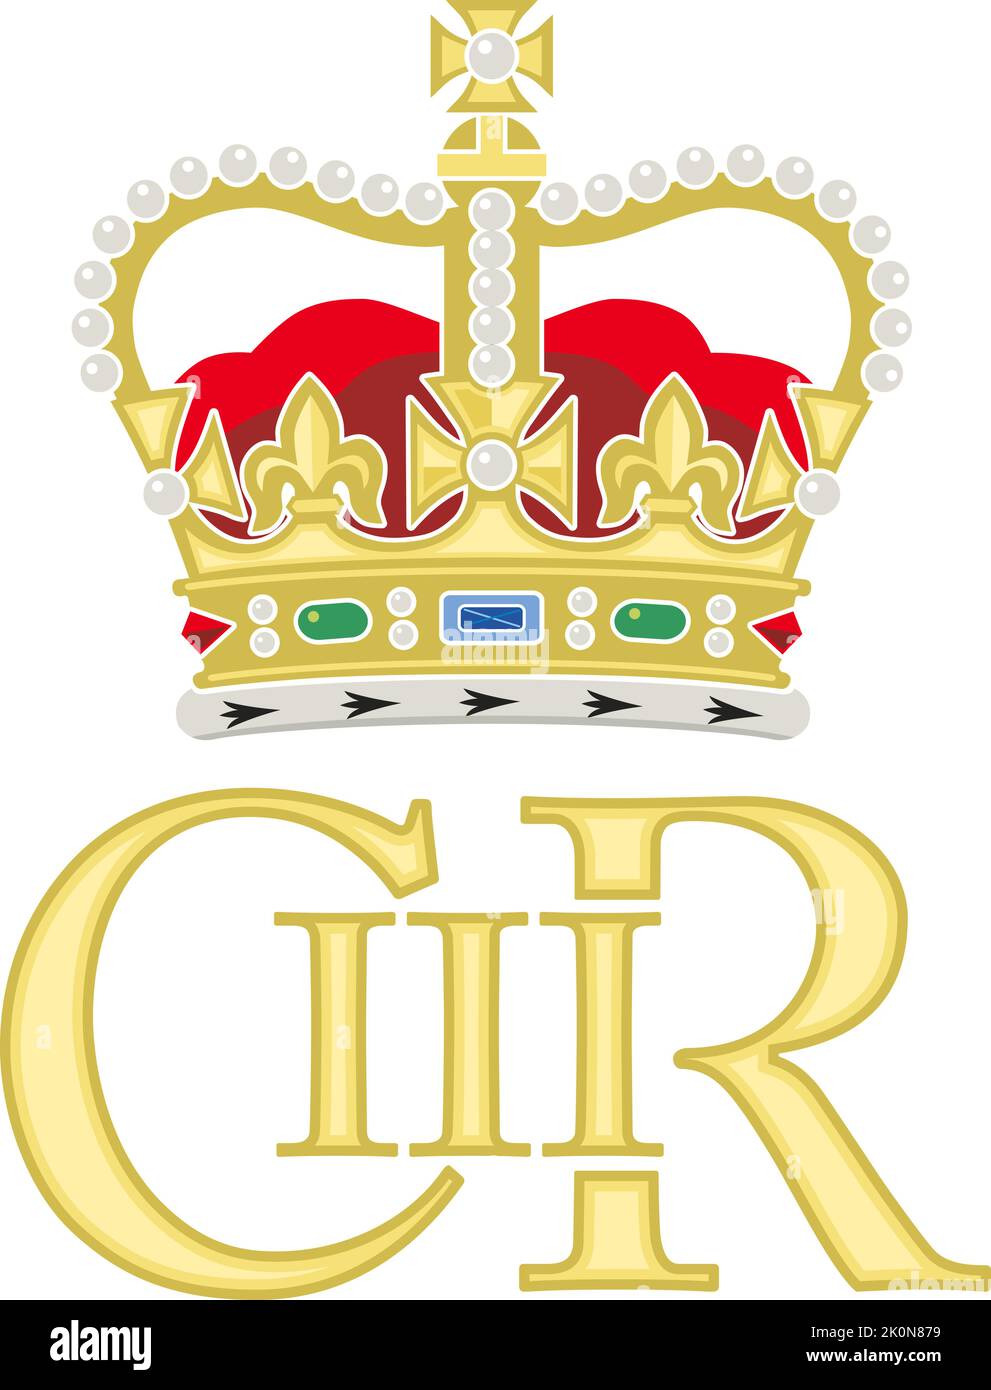 Charles III King of United Kingdom, Krönung 2022, Porträtsilhouette und Monogramm, Vektorgrafik Stock Vektor